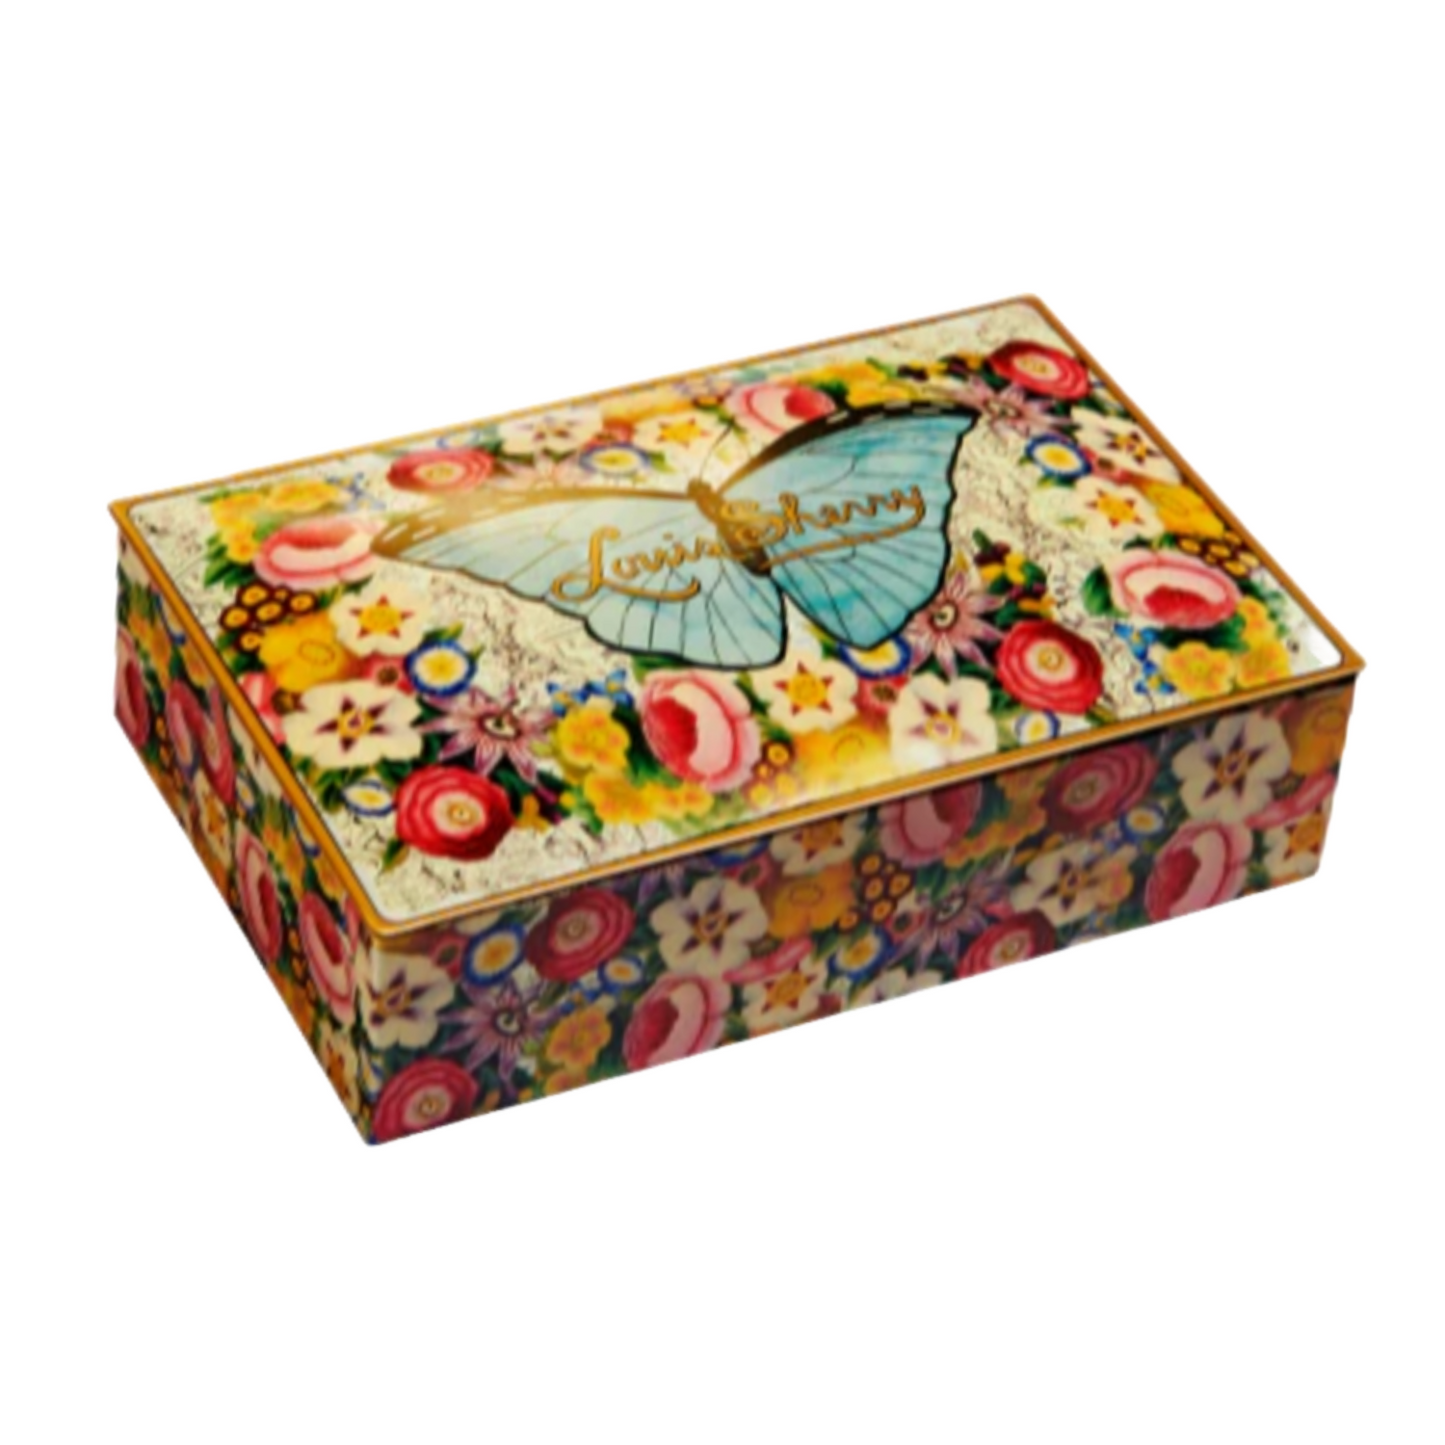 John Derian Butterfly 12-Piece Chocolate Truffle Box by Louis Sherry